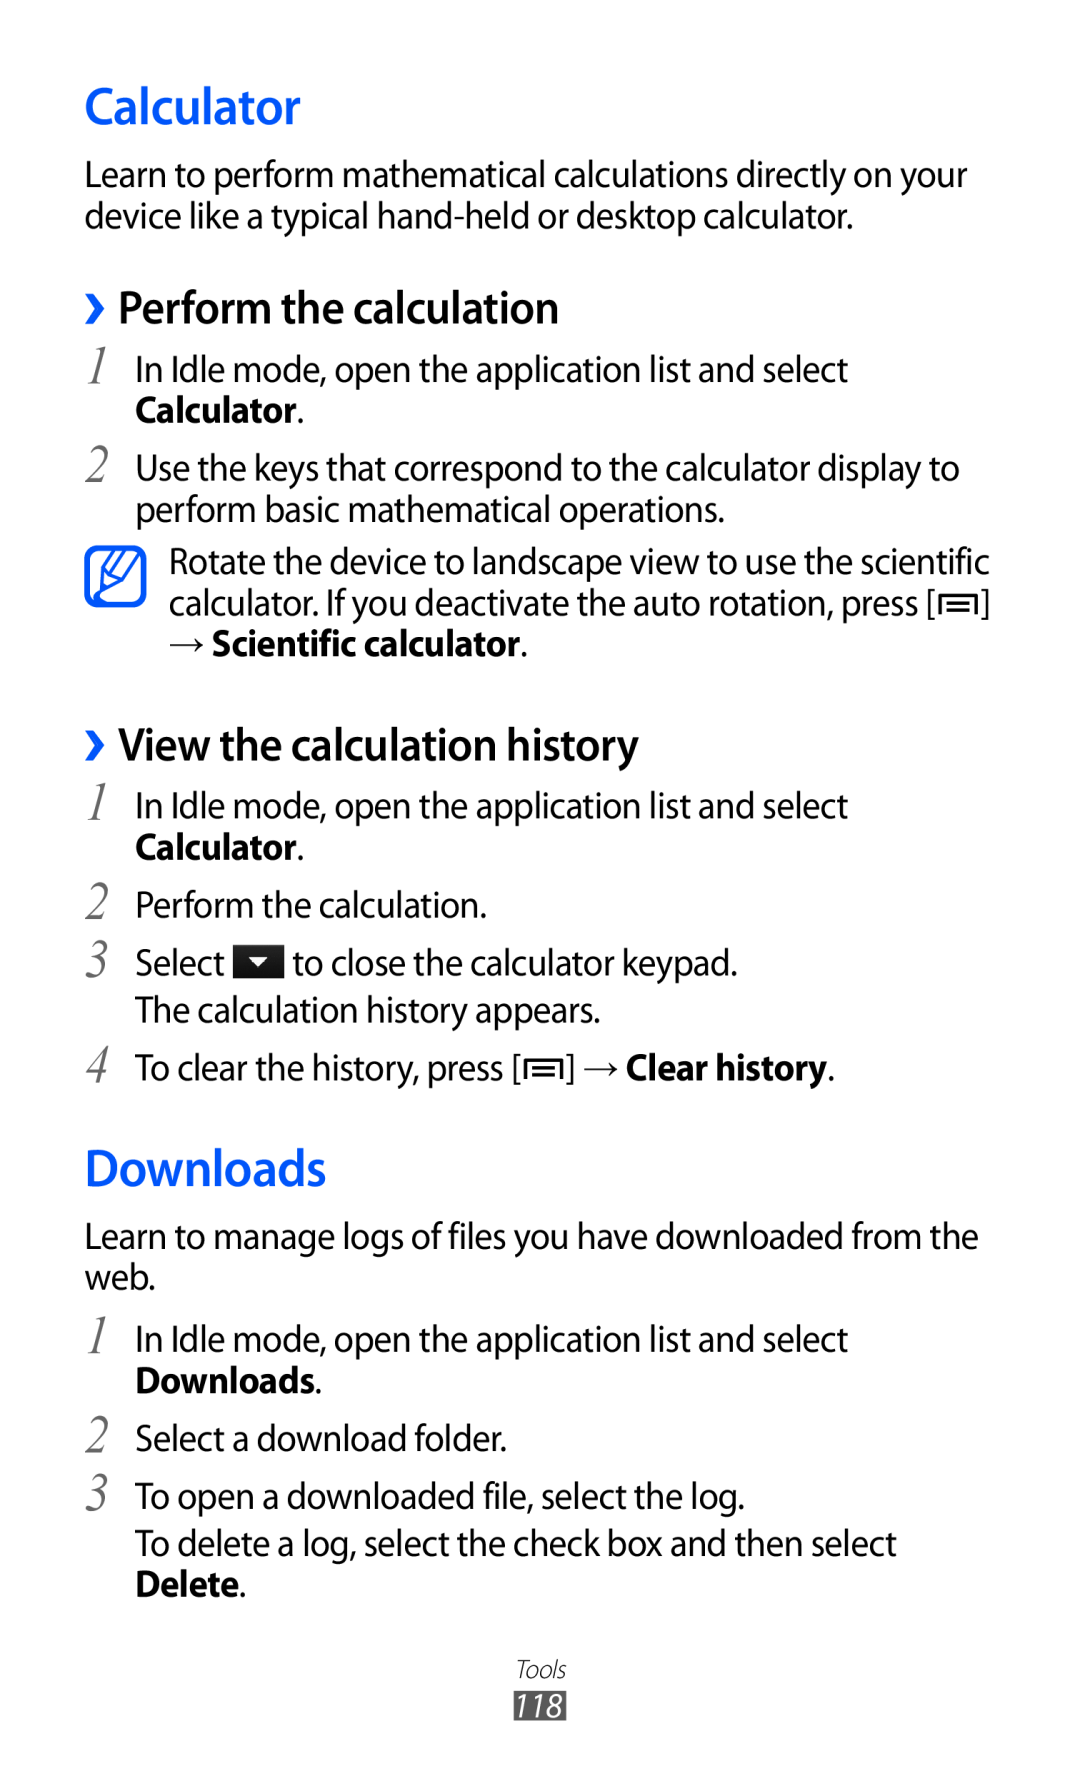 Samsung GT-I9070 Calculator, Downloads, ››Perform the calculation, ››View the calculation history, → Scientific calculator 